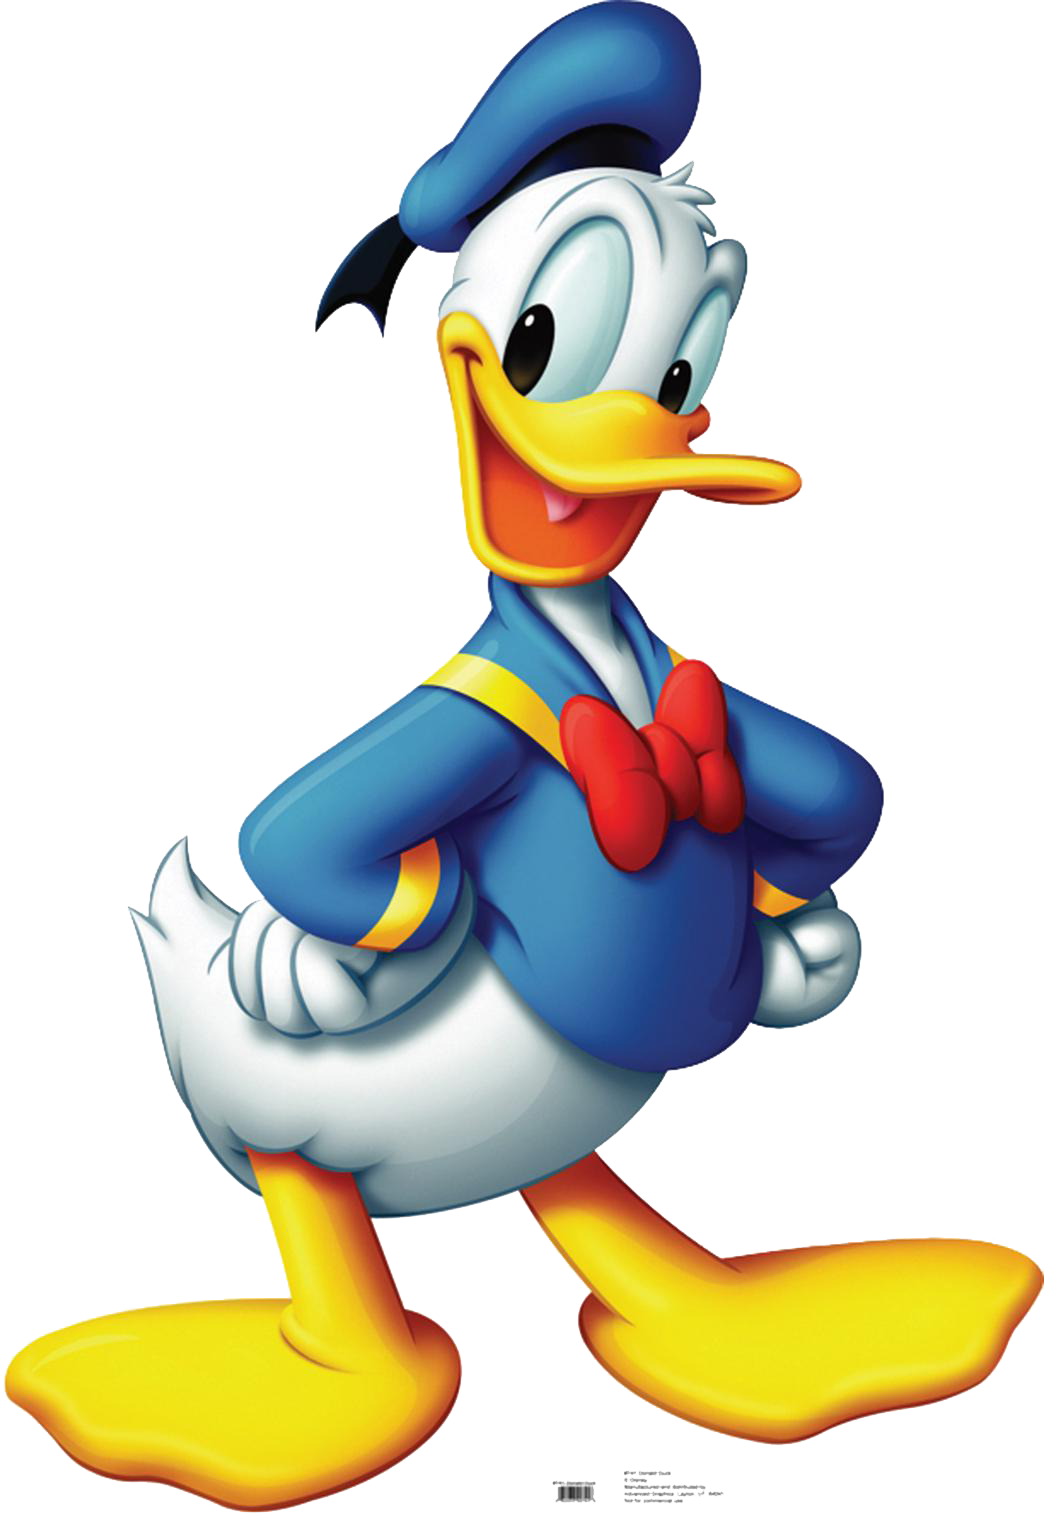 Donald Duck Happy